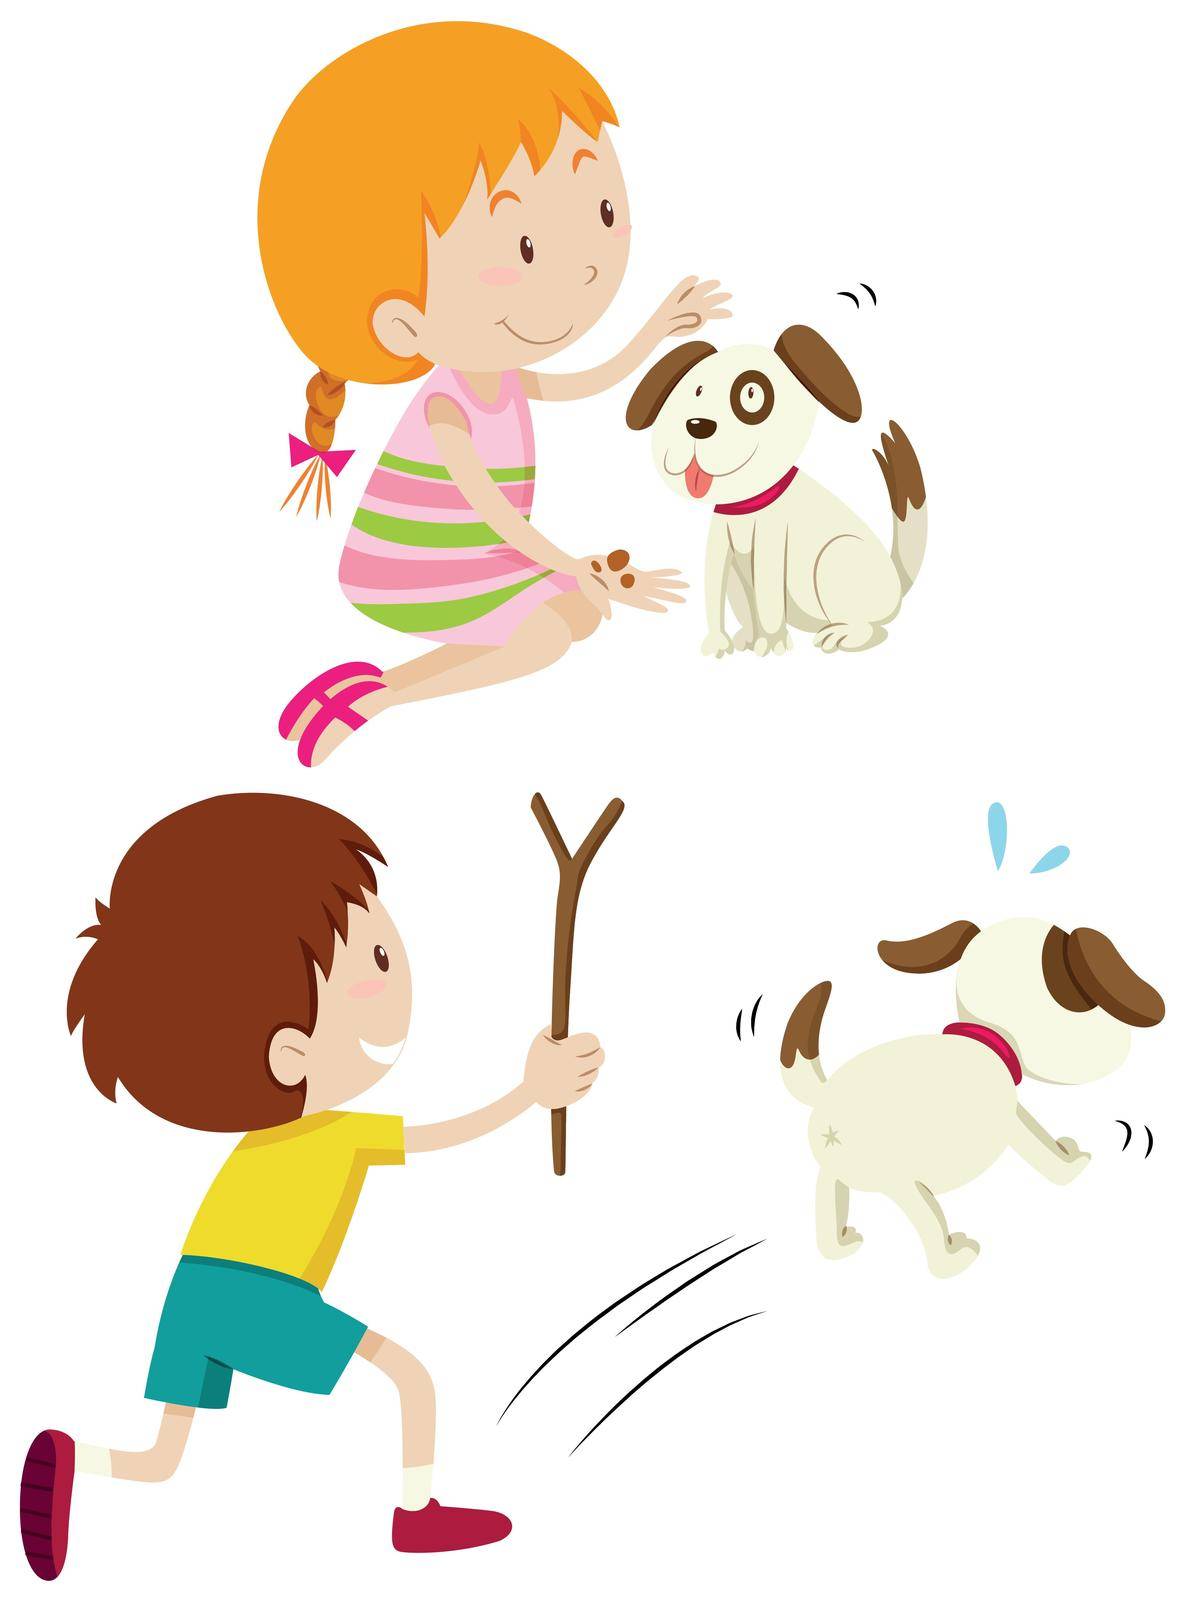 Girl feeding dog and boy chasing dog by iimages